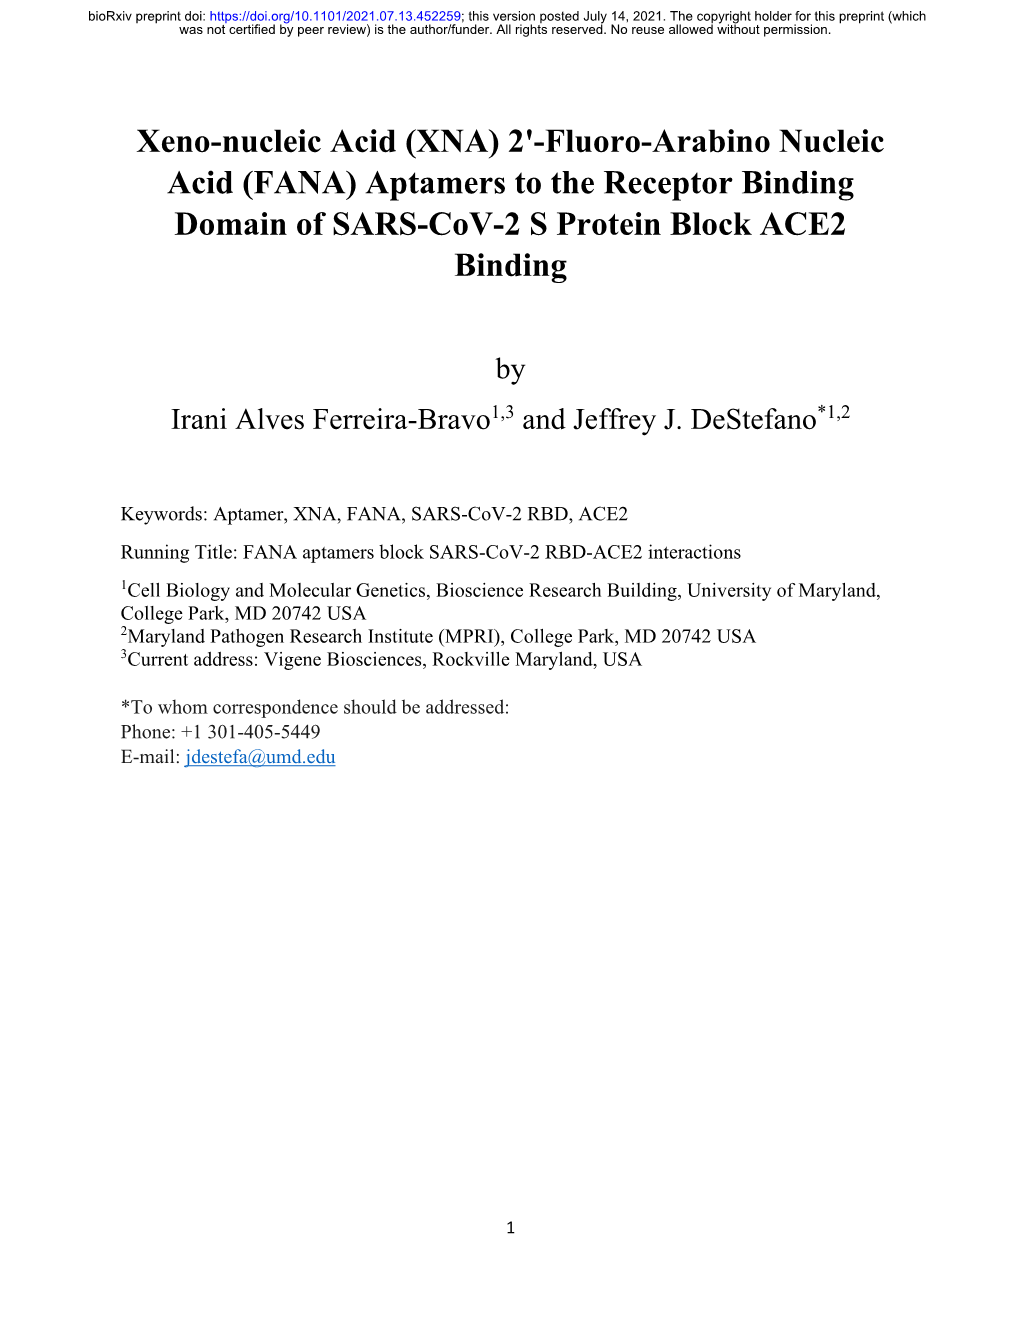 Xeno-Nucleic Acid (XNA) 2'-Fluoro-Arabino Nucleic Acid (FANA) Aptamers to the Receptor Binding Domain of SARS-Cov-2 S Protein Block ACE2 Binding